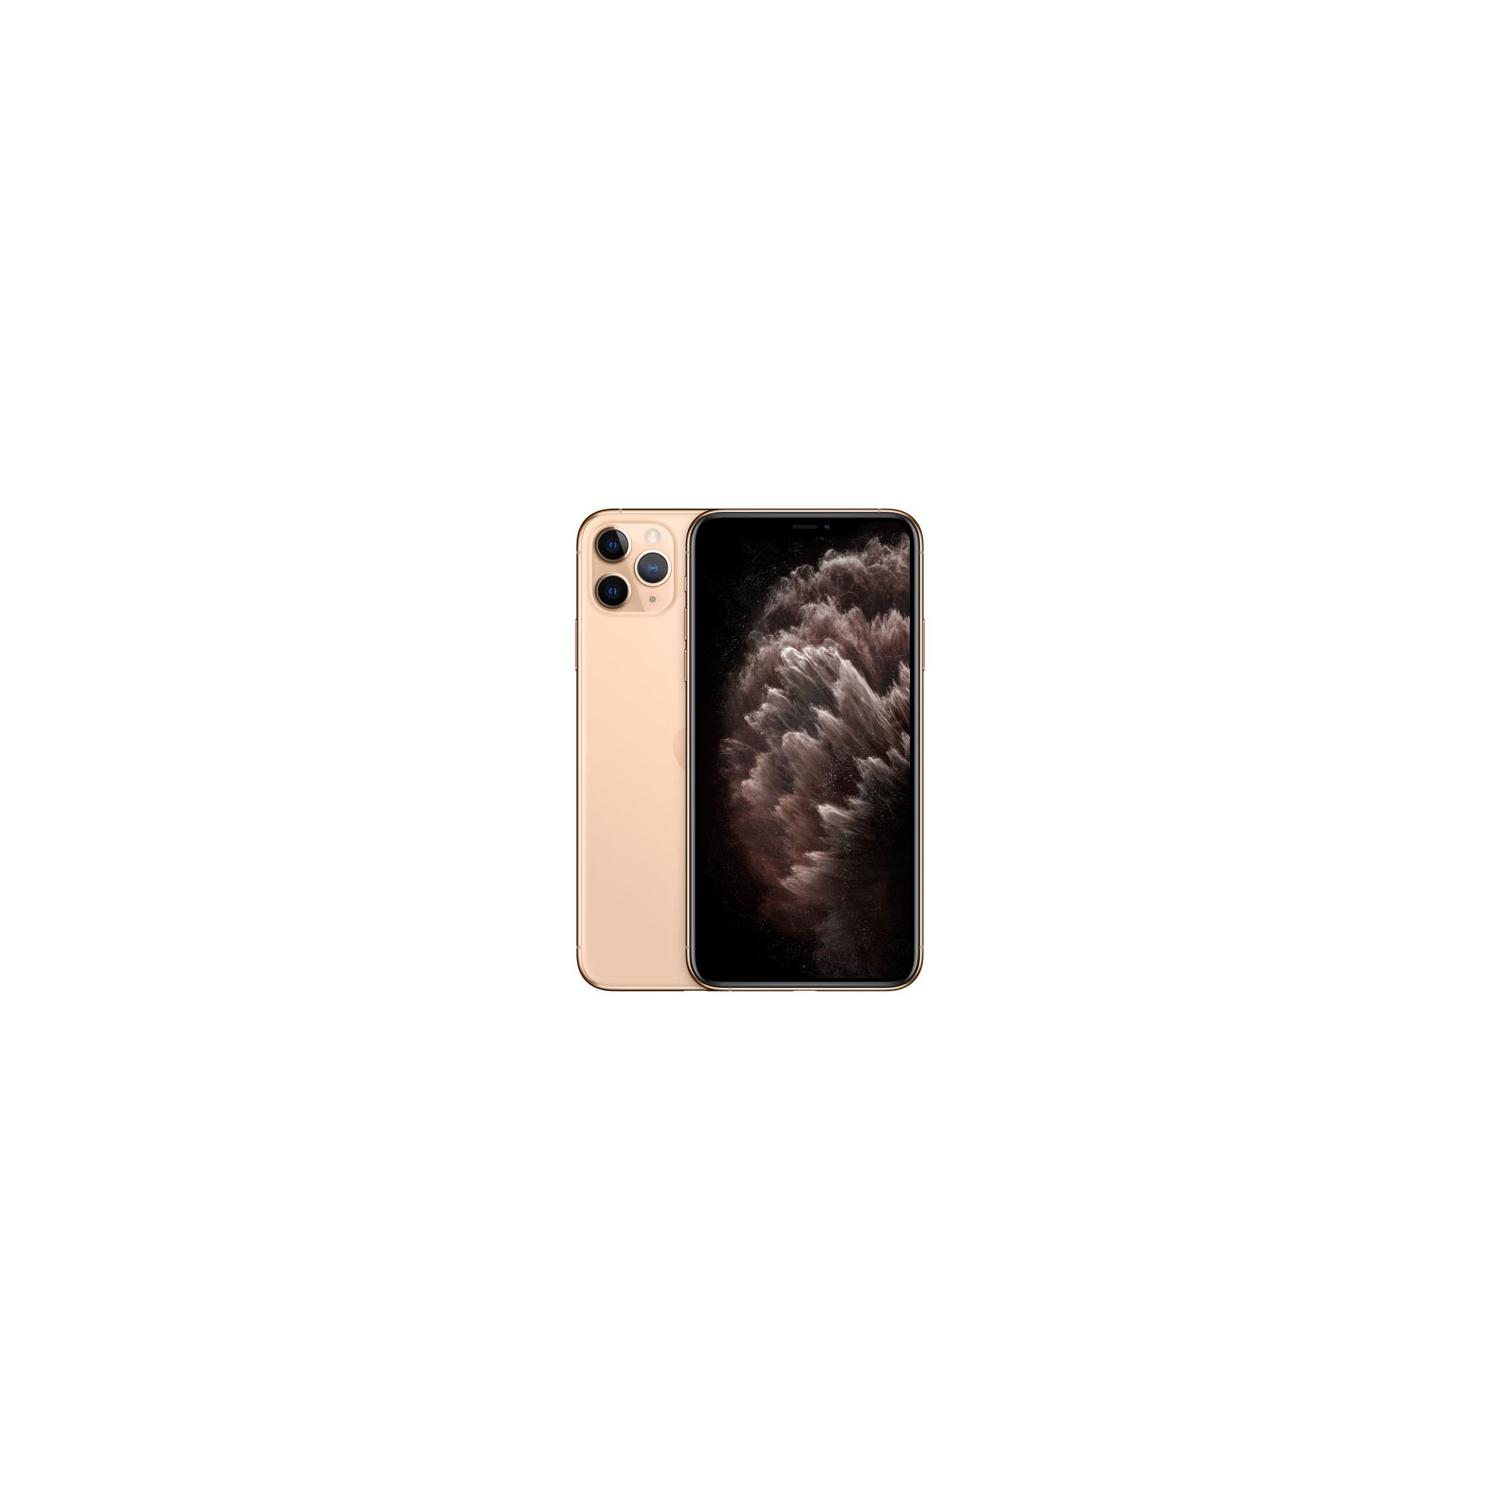 Refurbished (Fair) - Apple iPhone 11 Pro Max 512GB - Gold - Unlocked